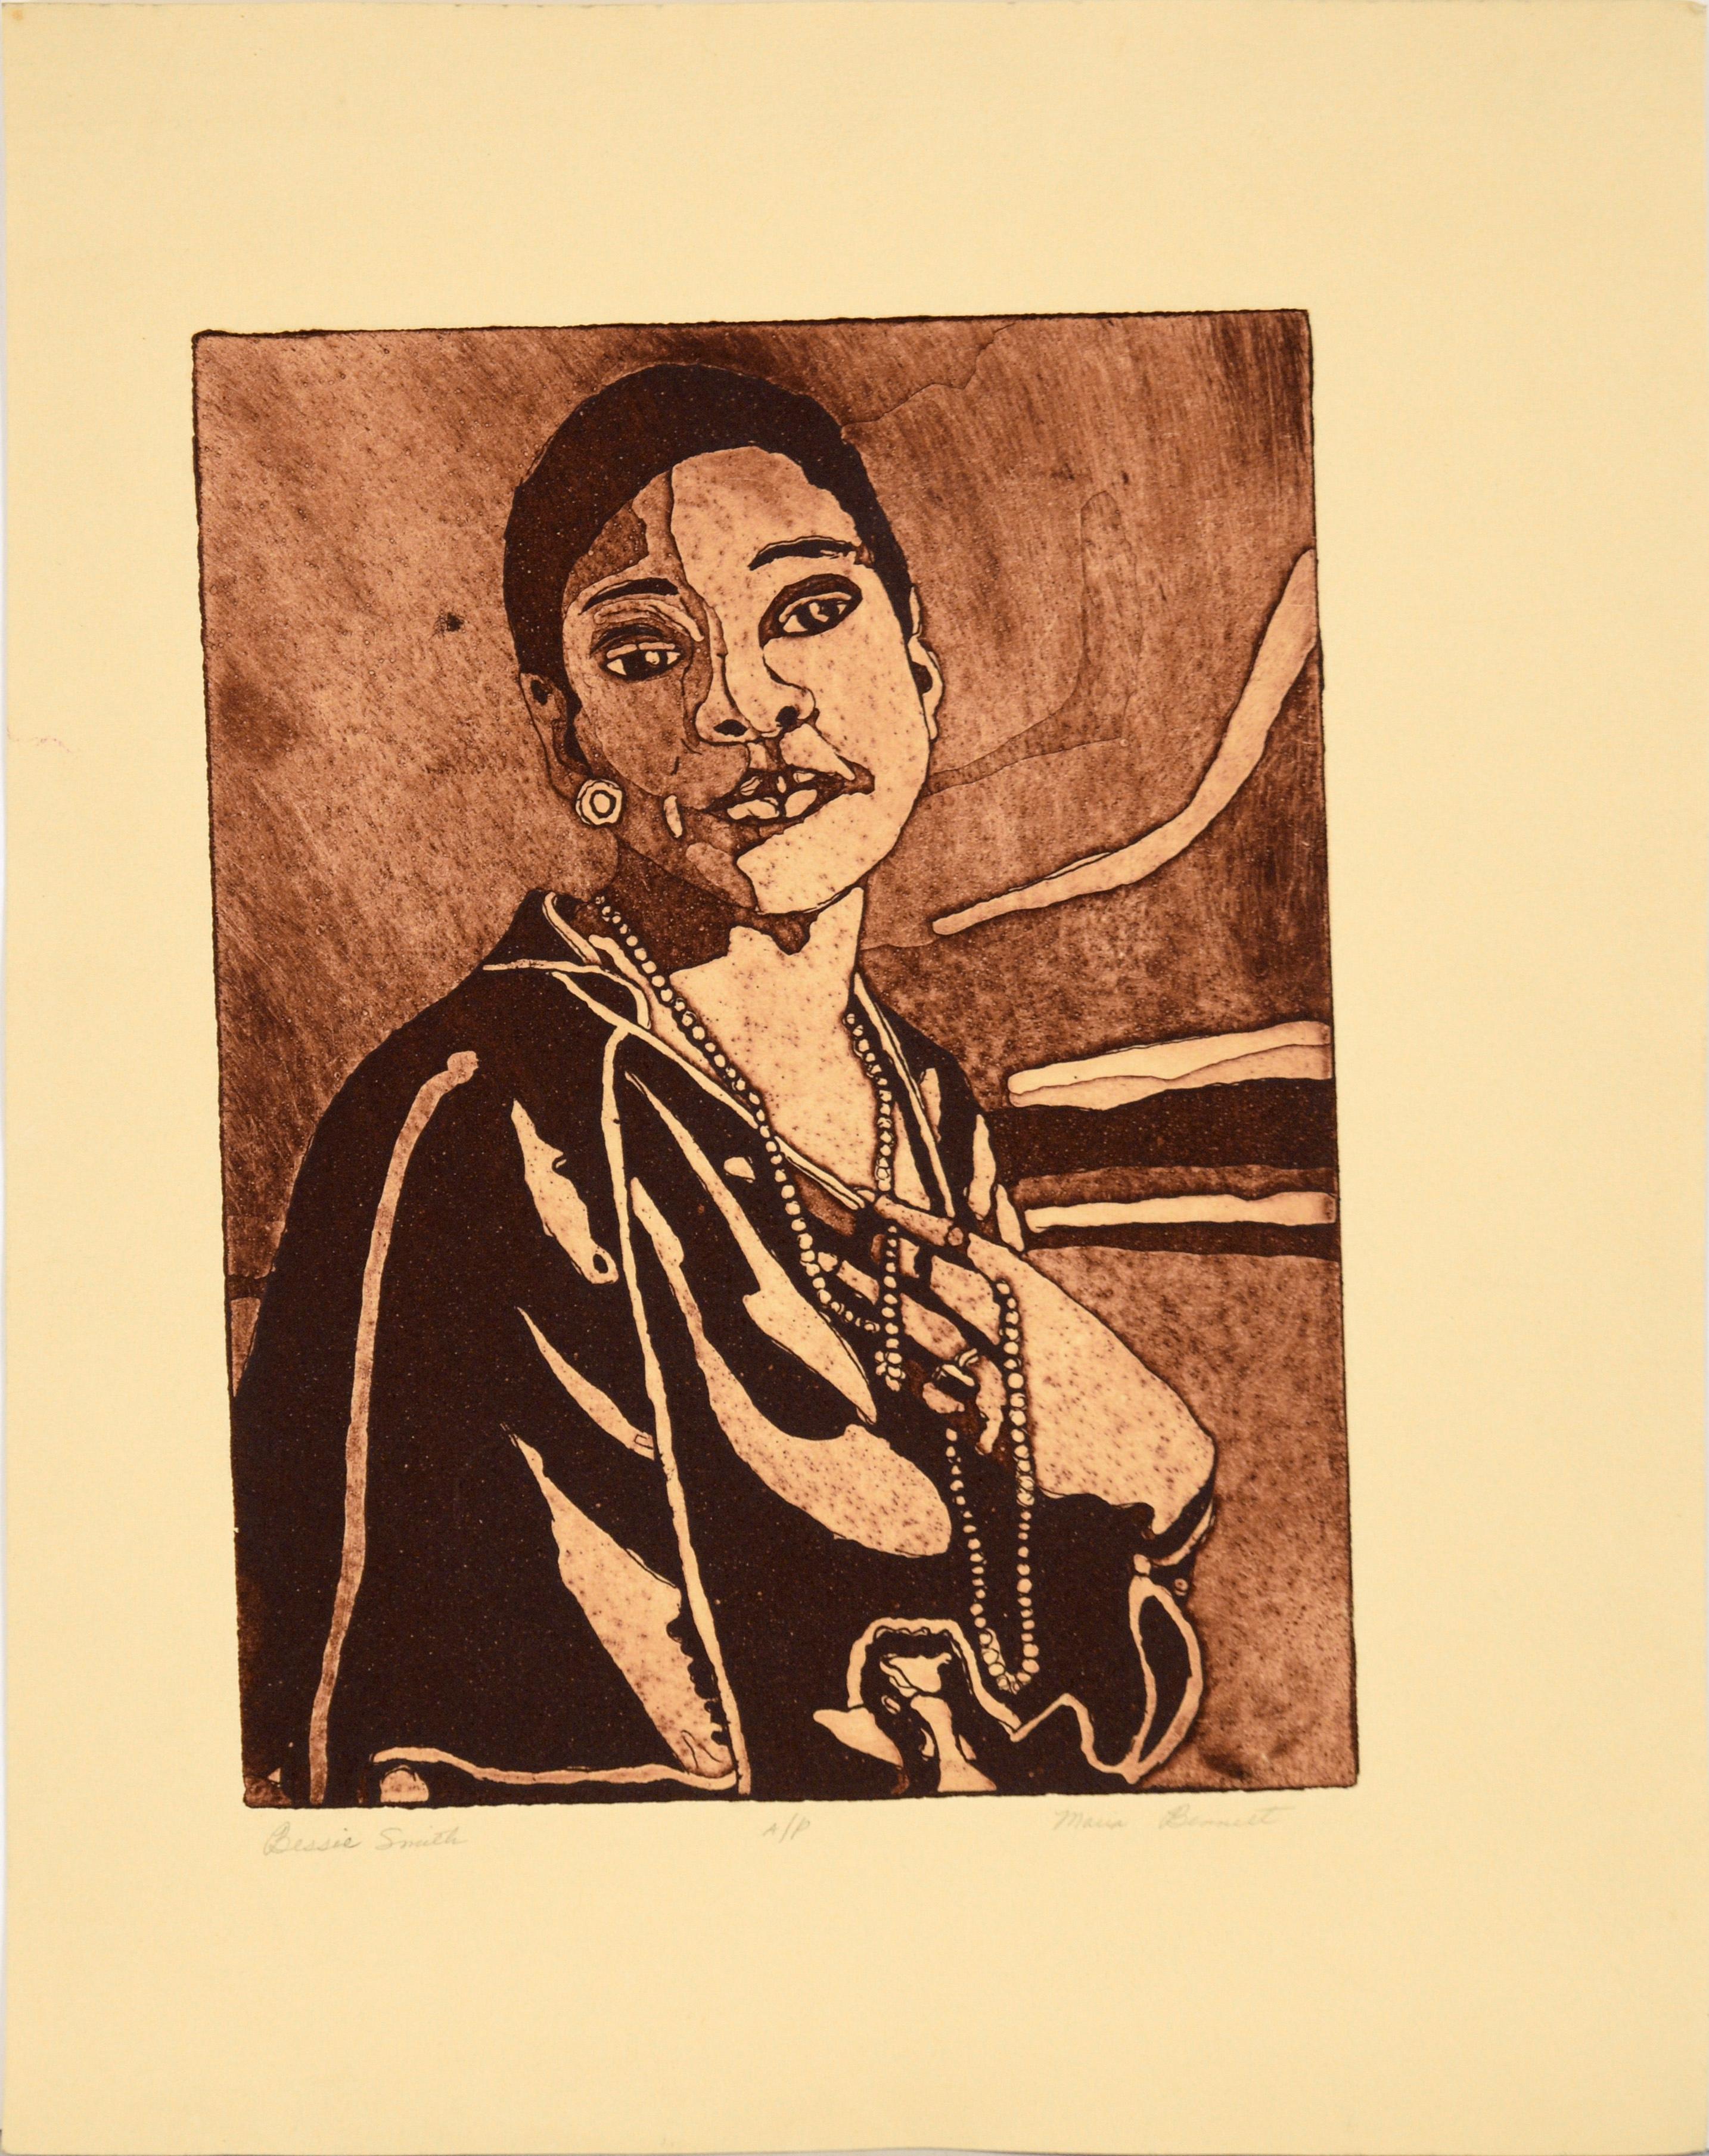 Unknown Portrait Print - "Bessie Smith" - Musician's Portrait Etching on Paper (A/P)